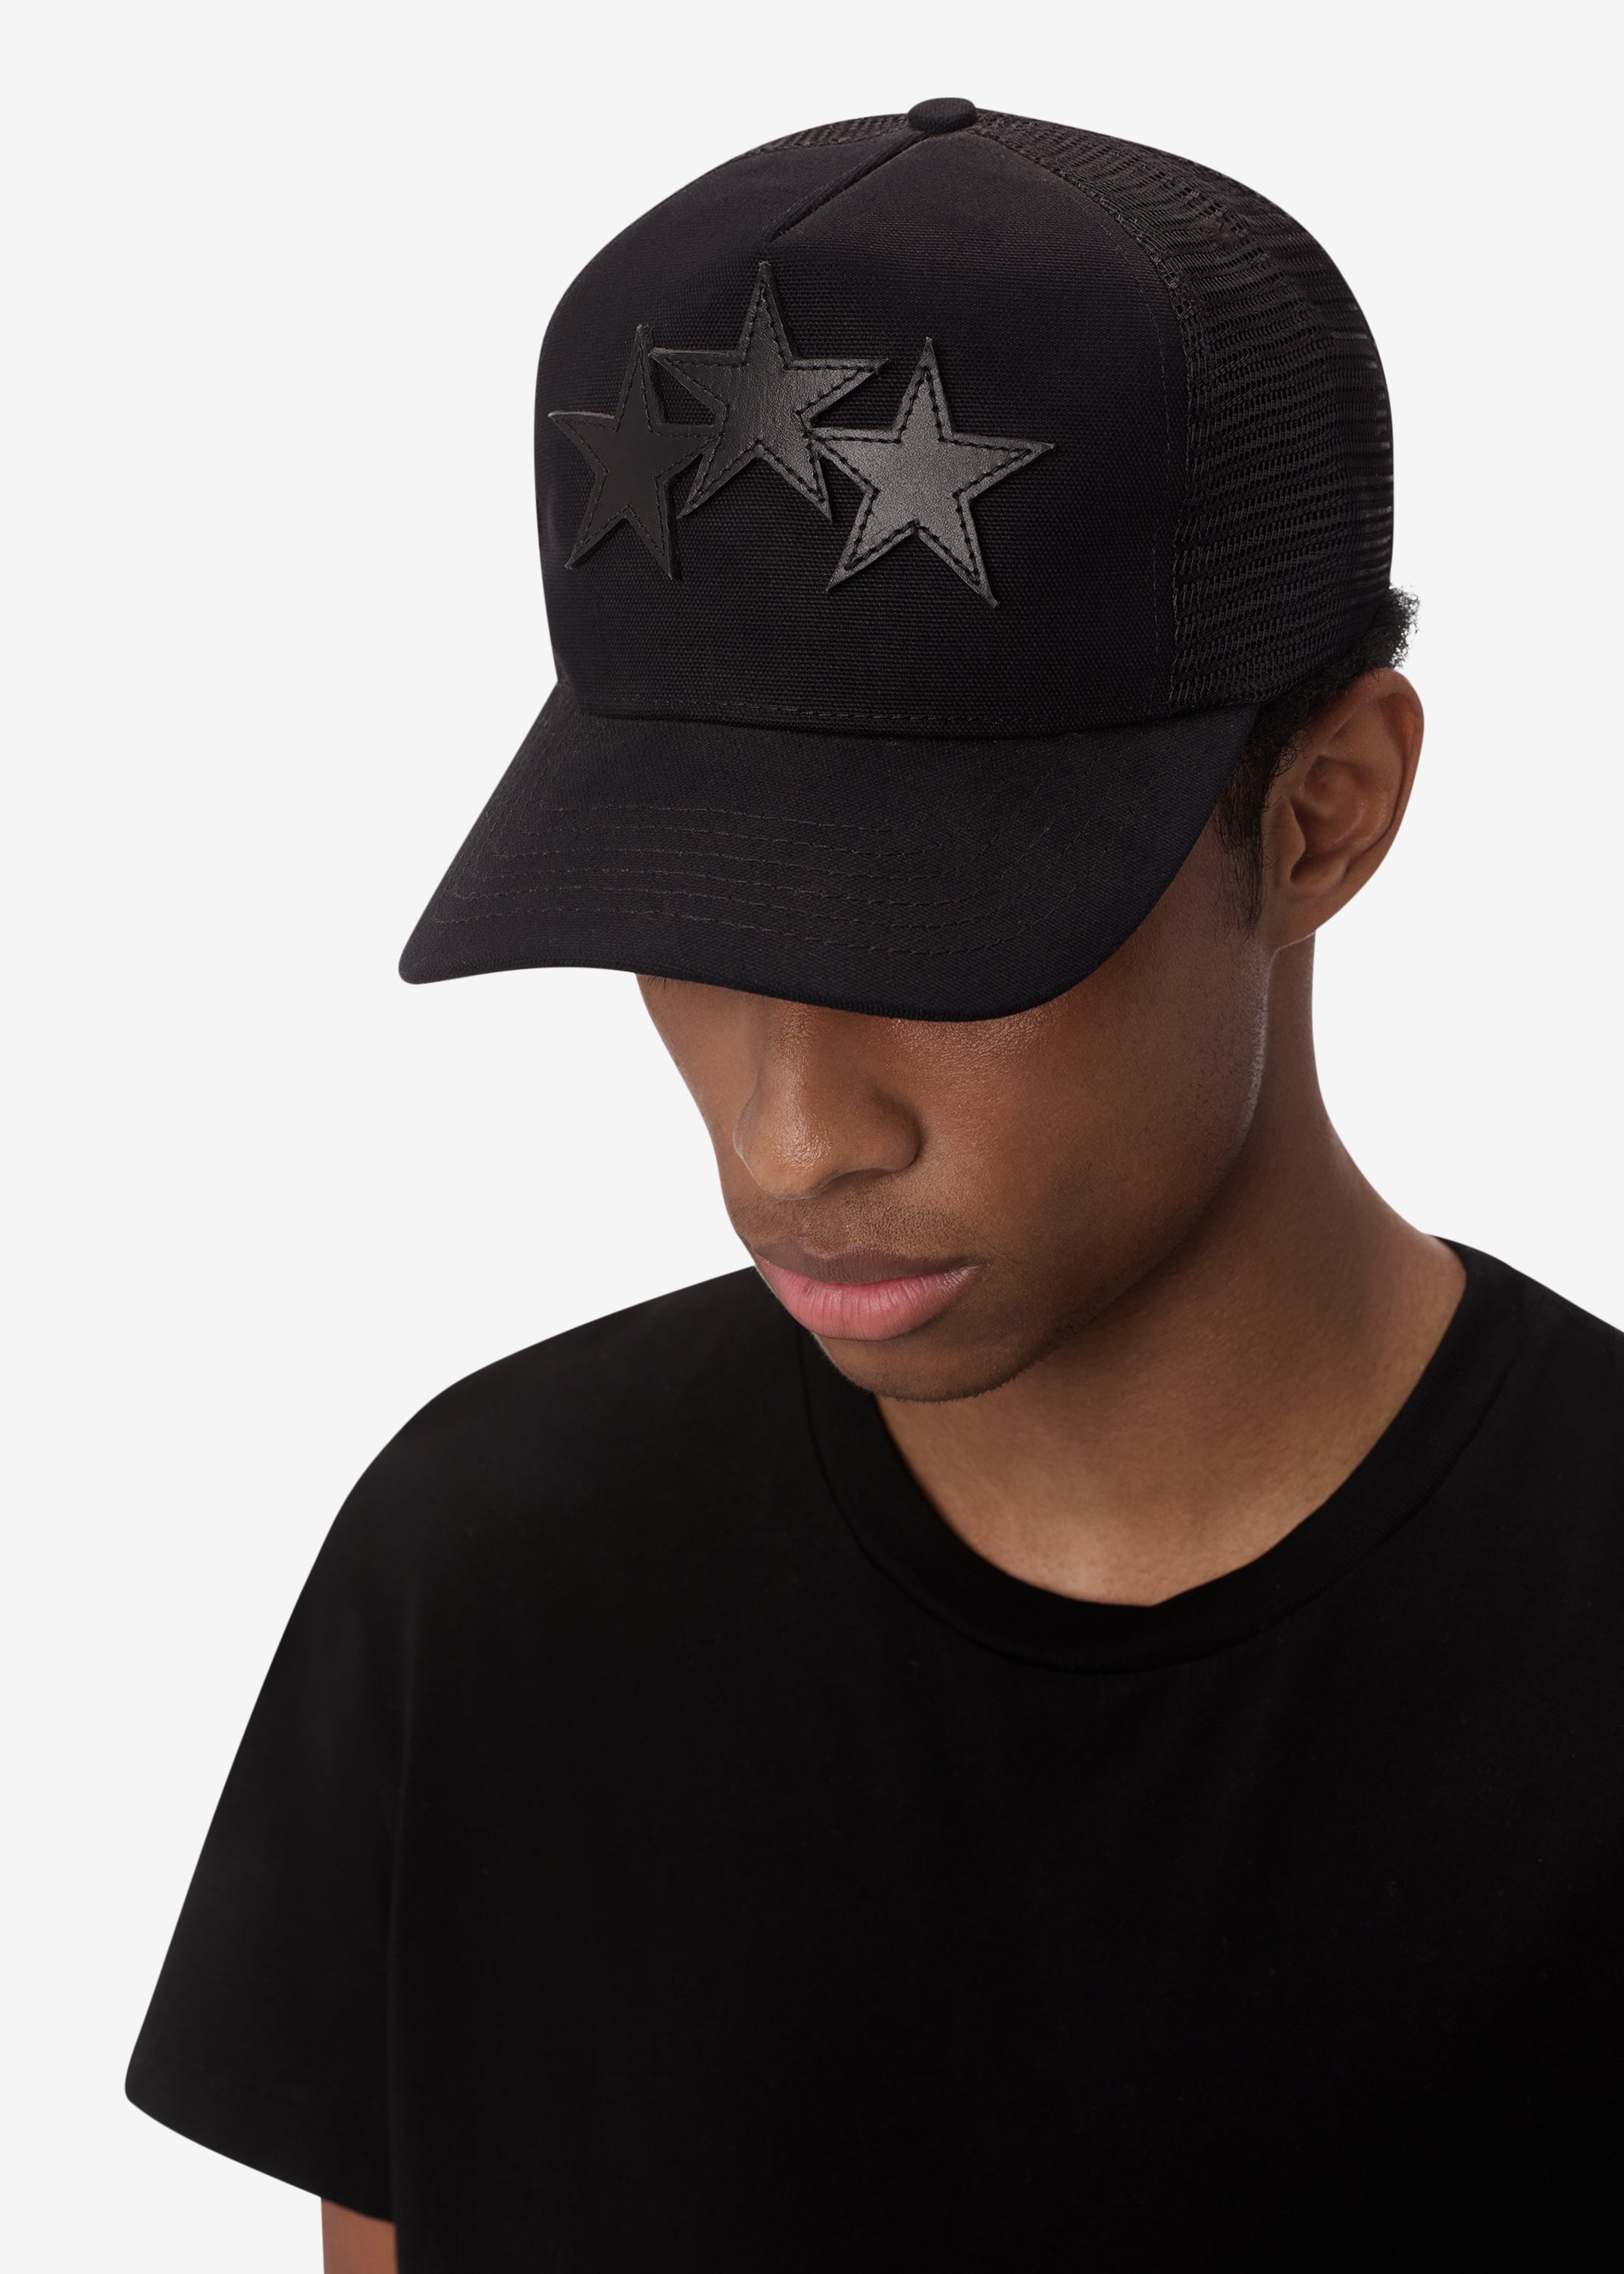 3 STAR TRUCKER HAT - 6